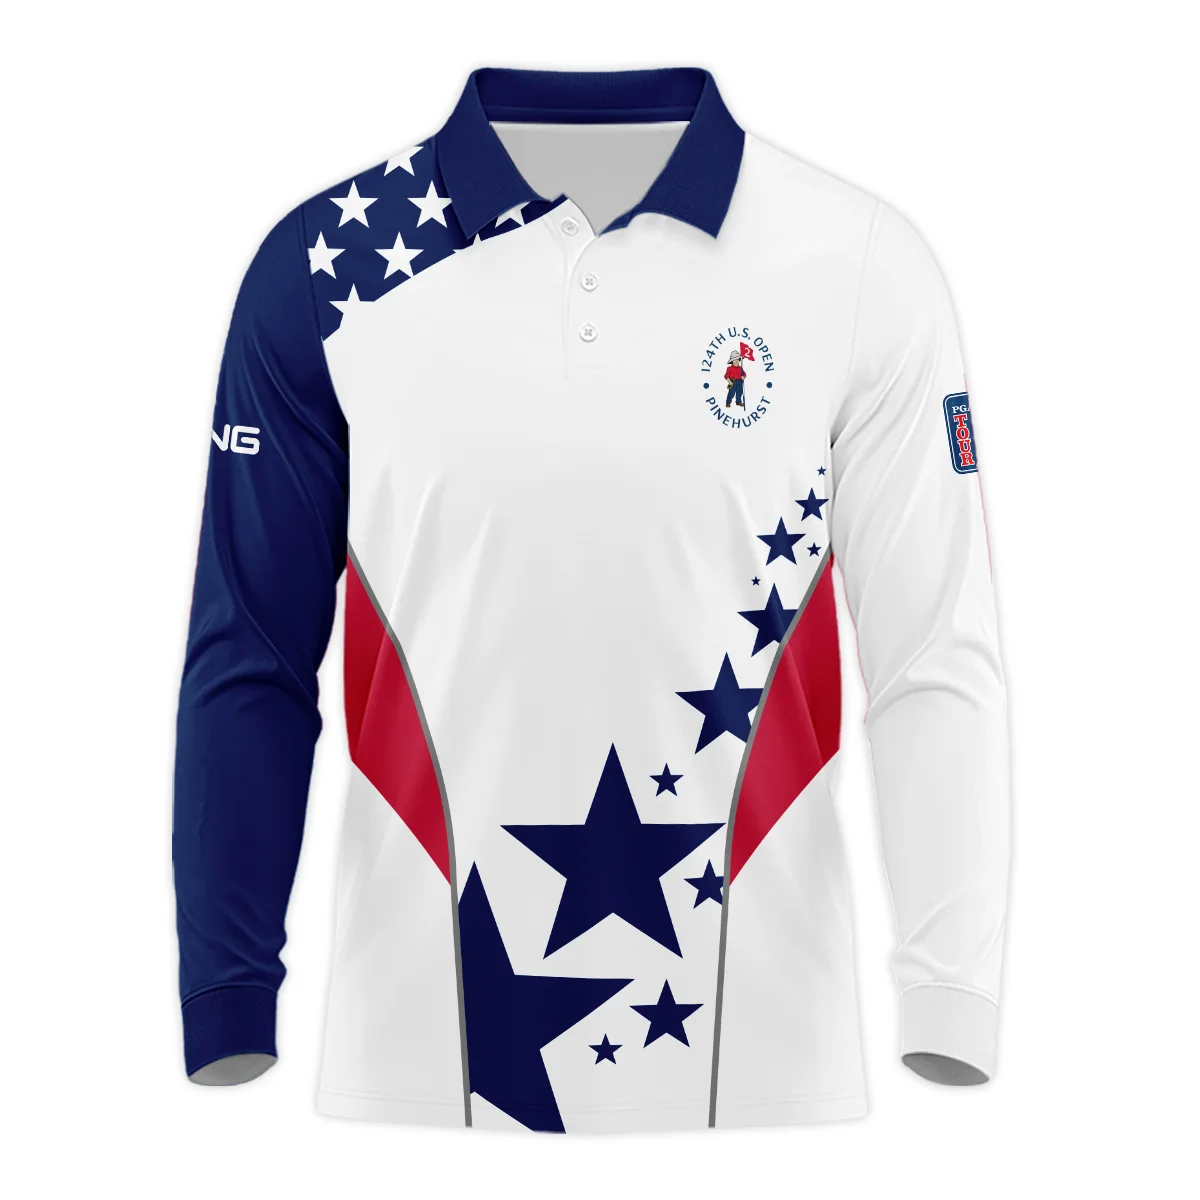 124th U.S. Open Pinehurst Ping Stars US Flag White Blue Unisex T-Shirt Style Classic T-Shirt